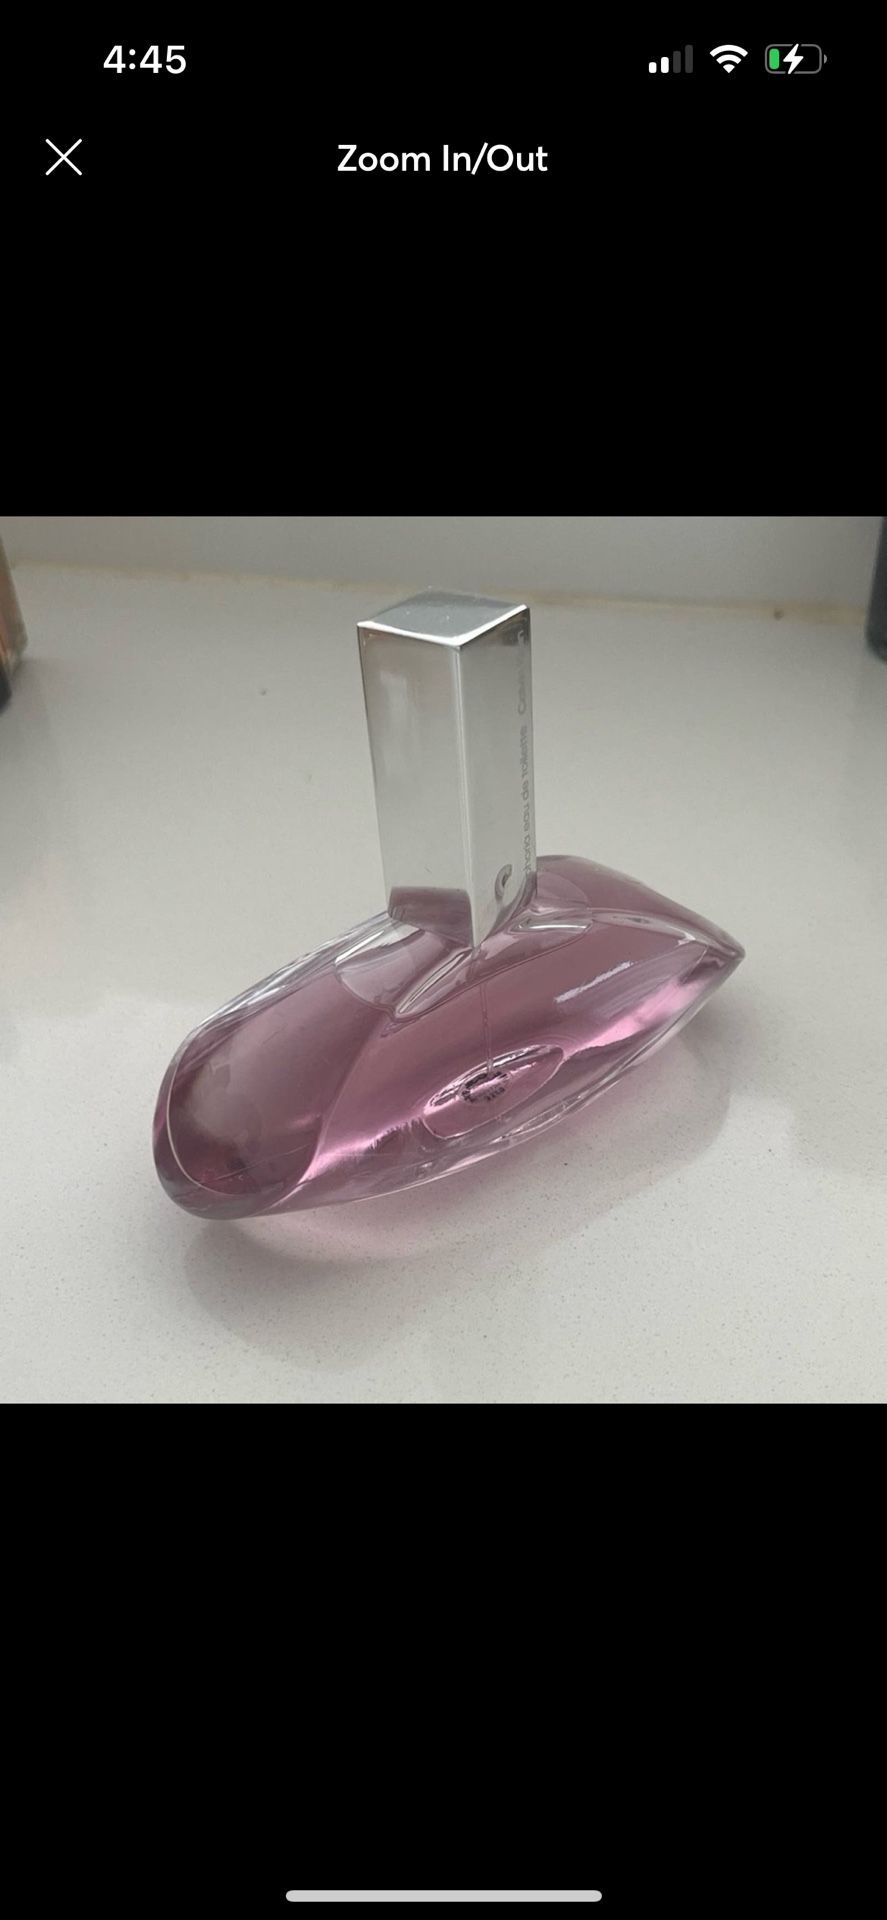 Calvin Klein Euphoria Perfume